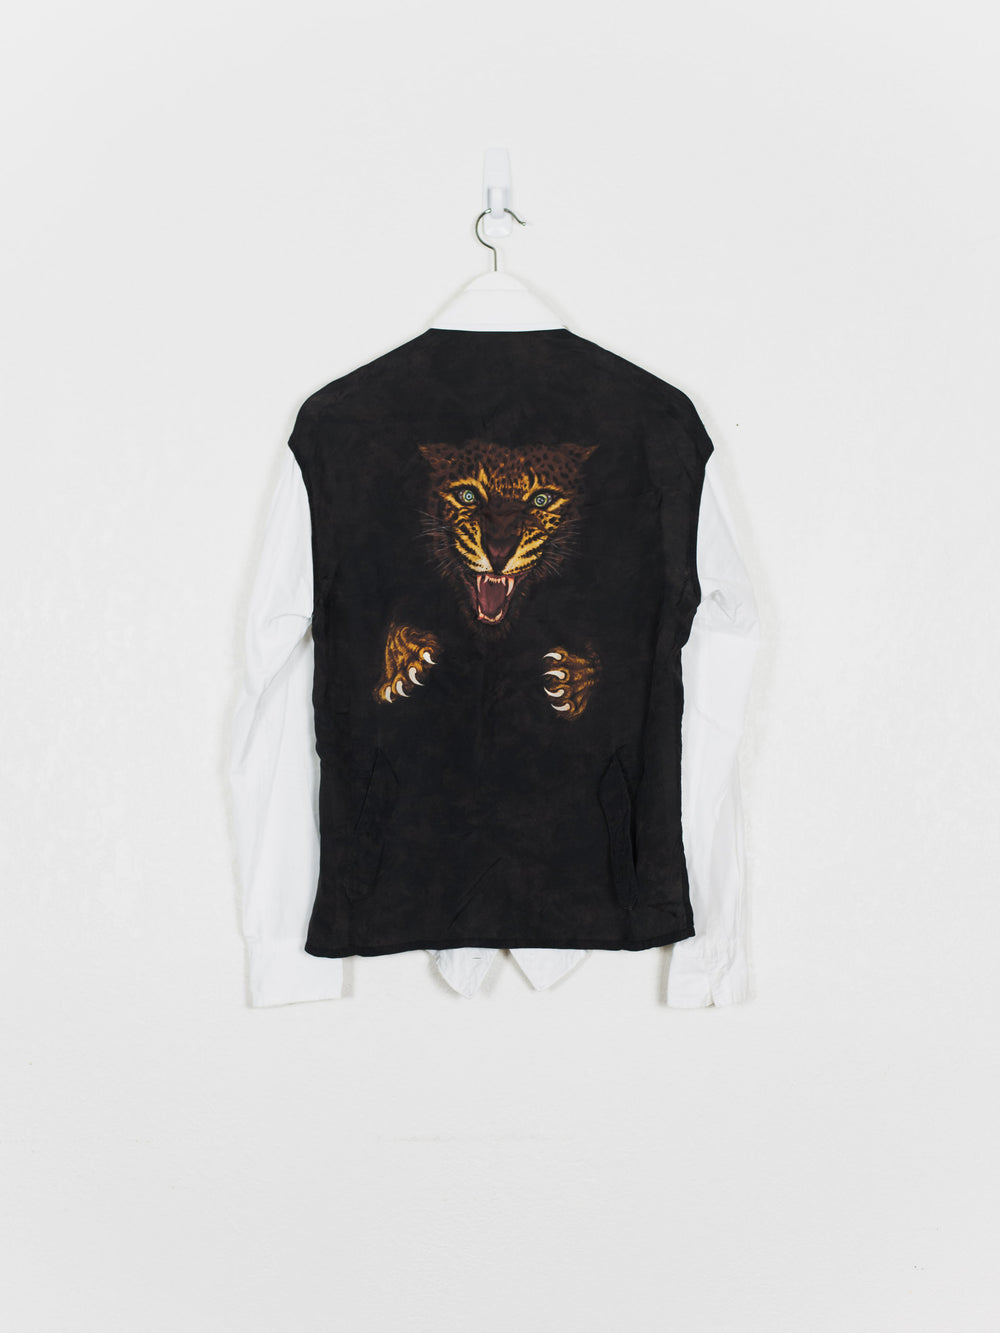 Yohji Yamamoto Pour Homme AW09 Tiger-Print Shirt